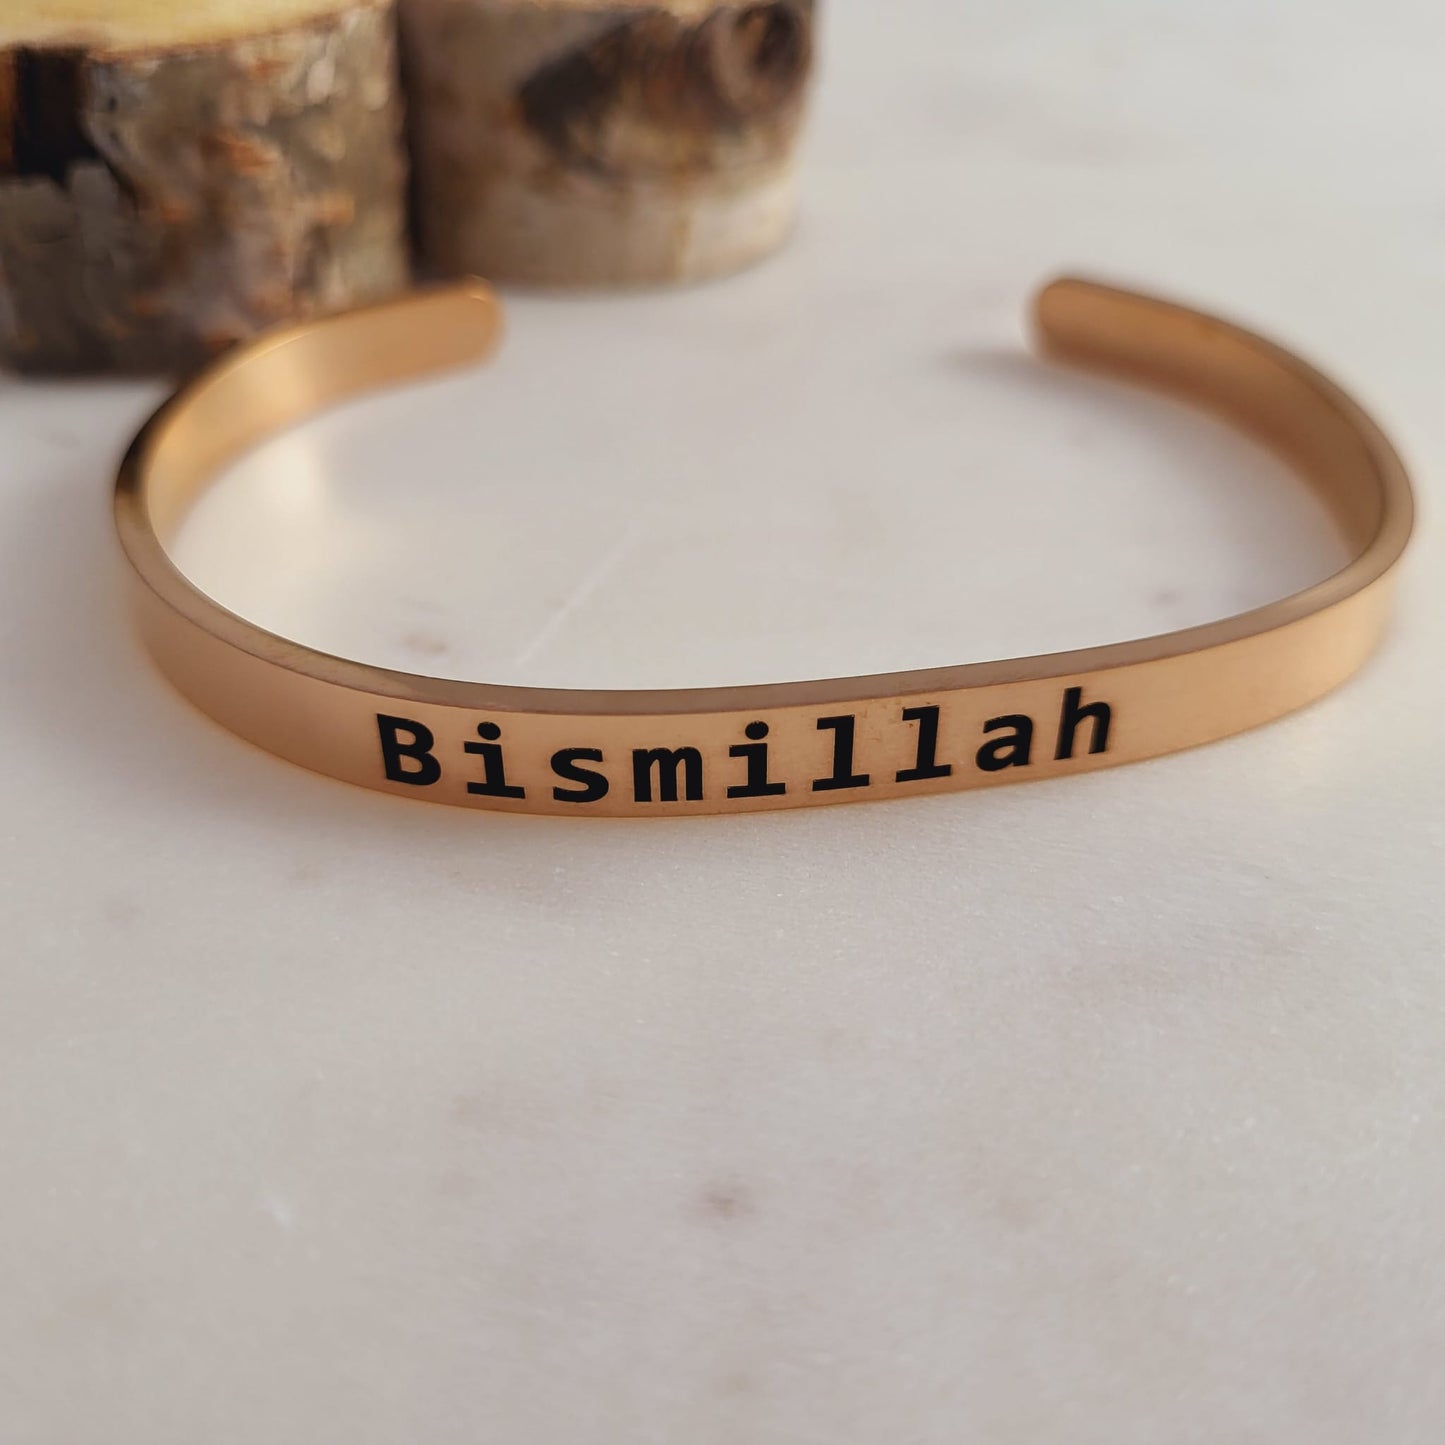 Ramadan Eid Gifts - Bismillah Gifts Bracelet Muslim Islamic Bracelets